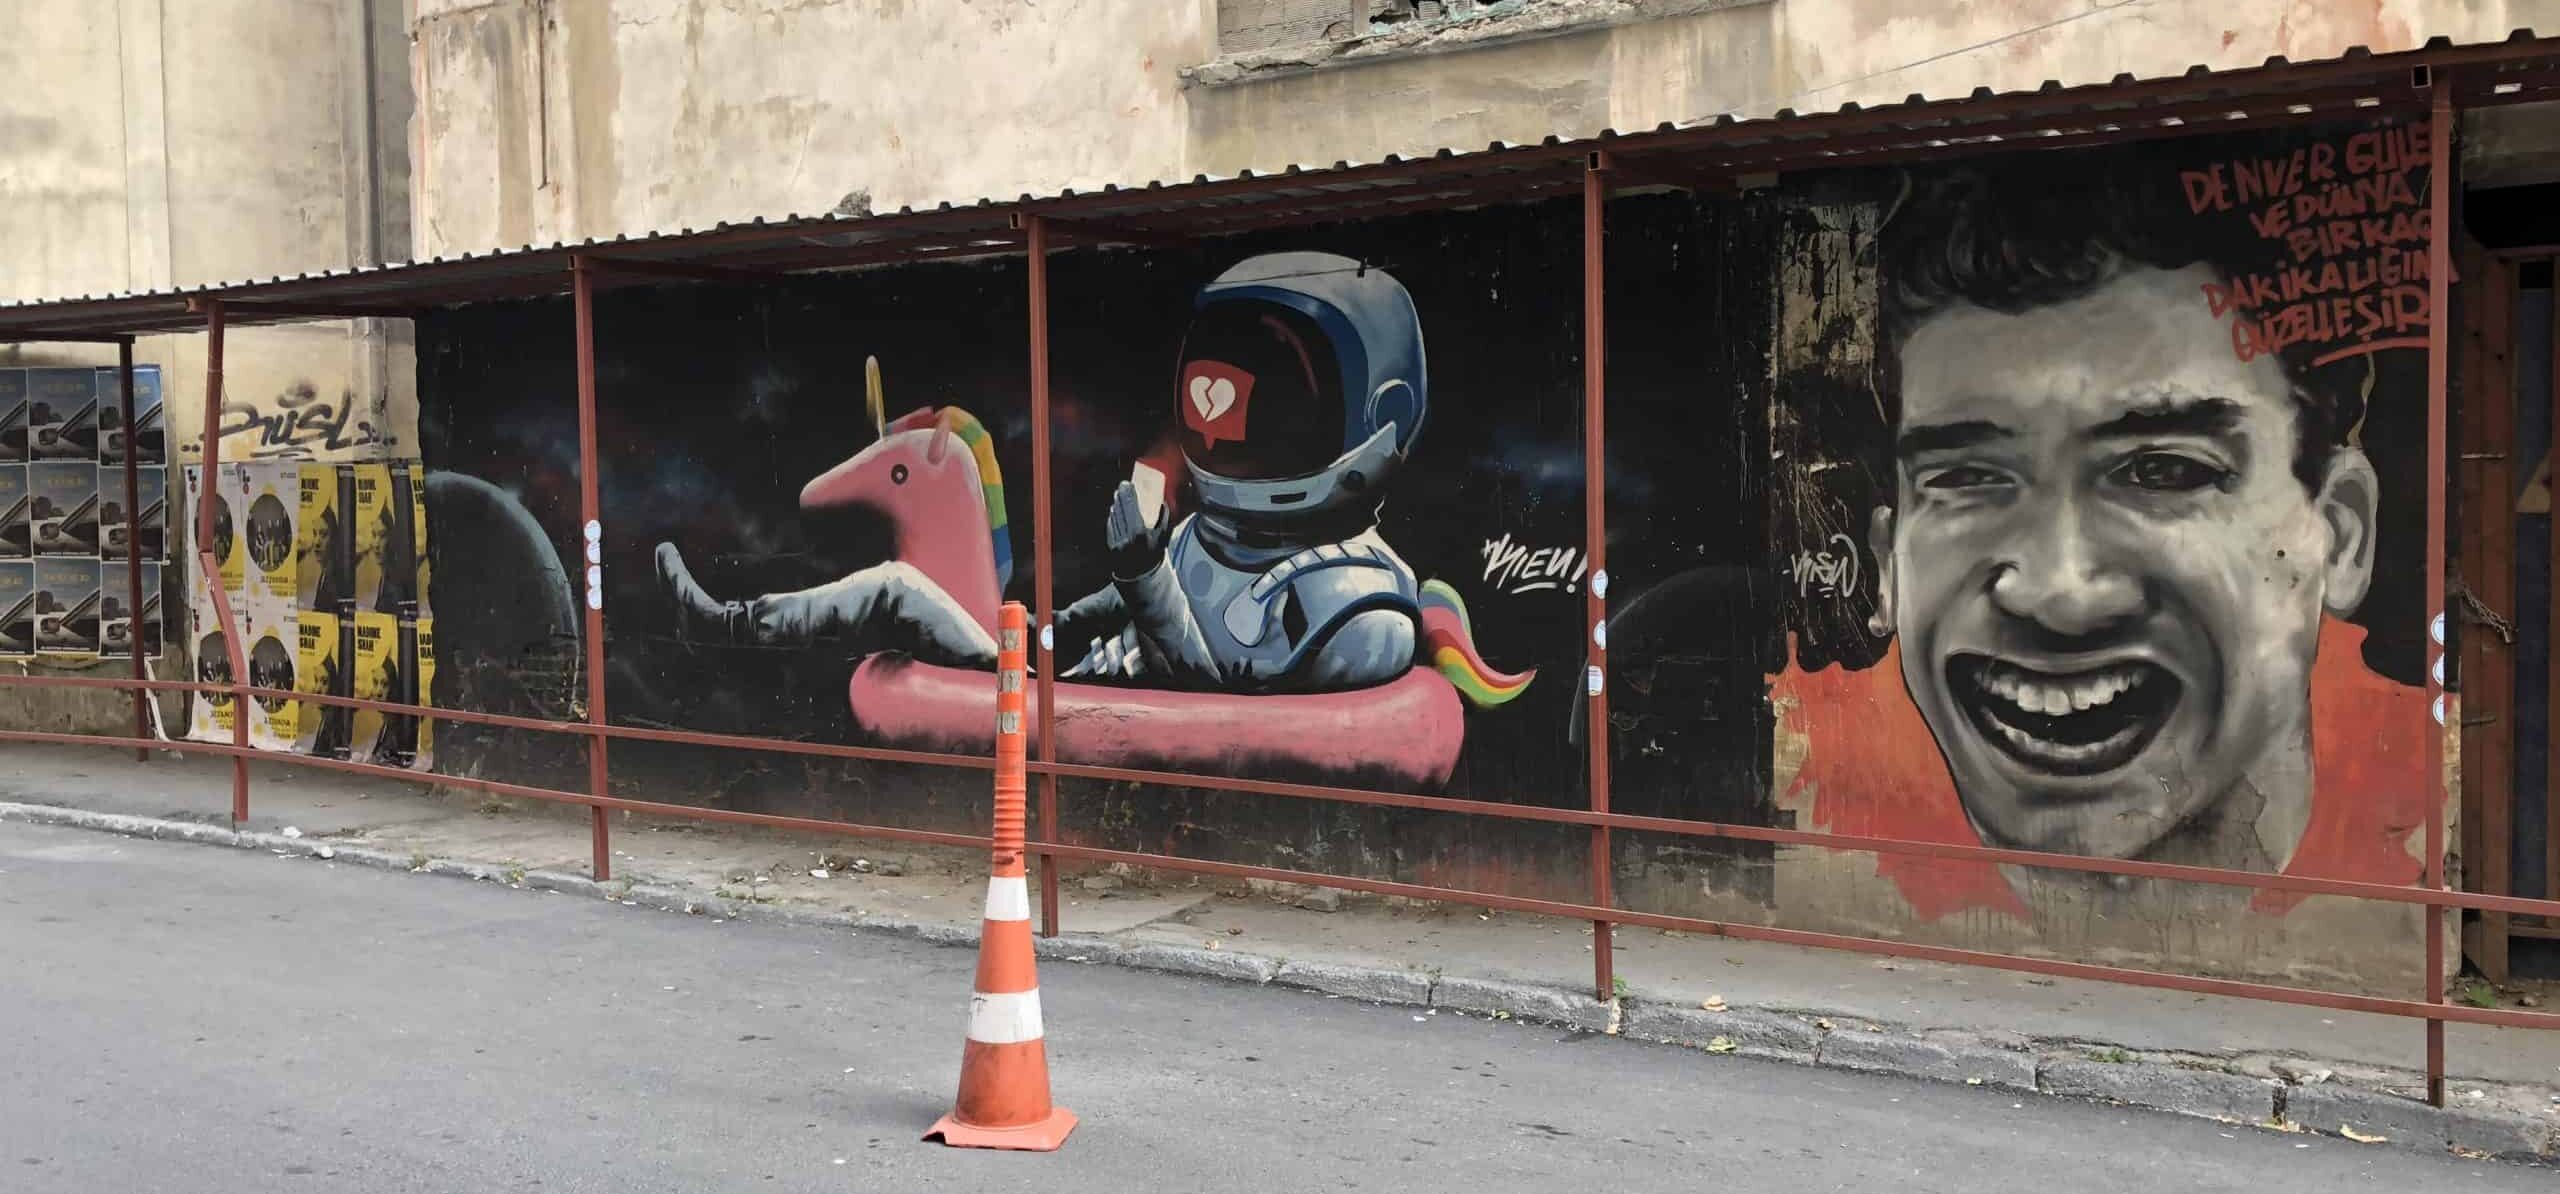 Murals across the street from Bomontiada in Şişli, Istanbul, Turkey